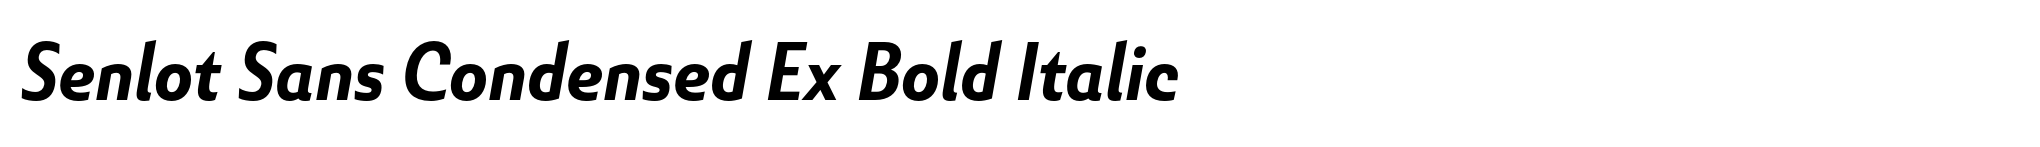 Senlot Sans Condensed Ex Bold Italic image